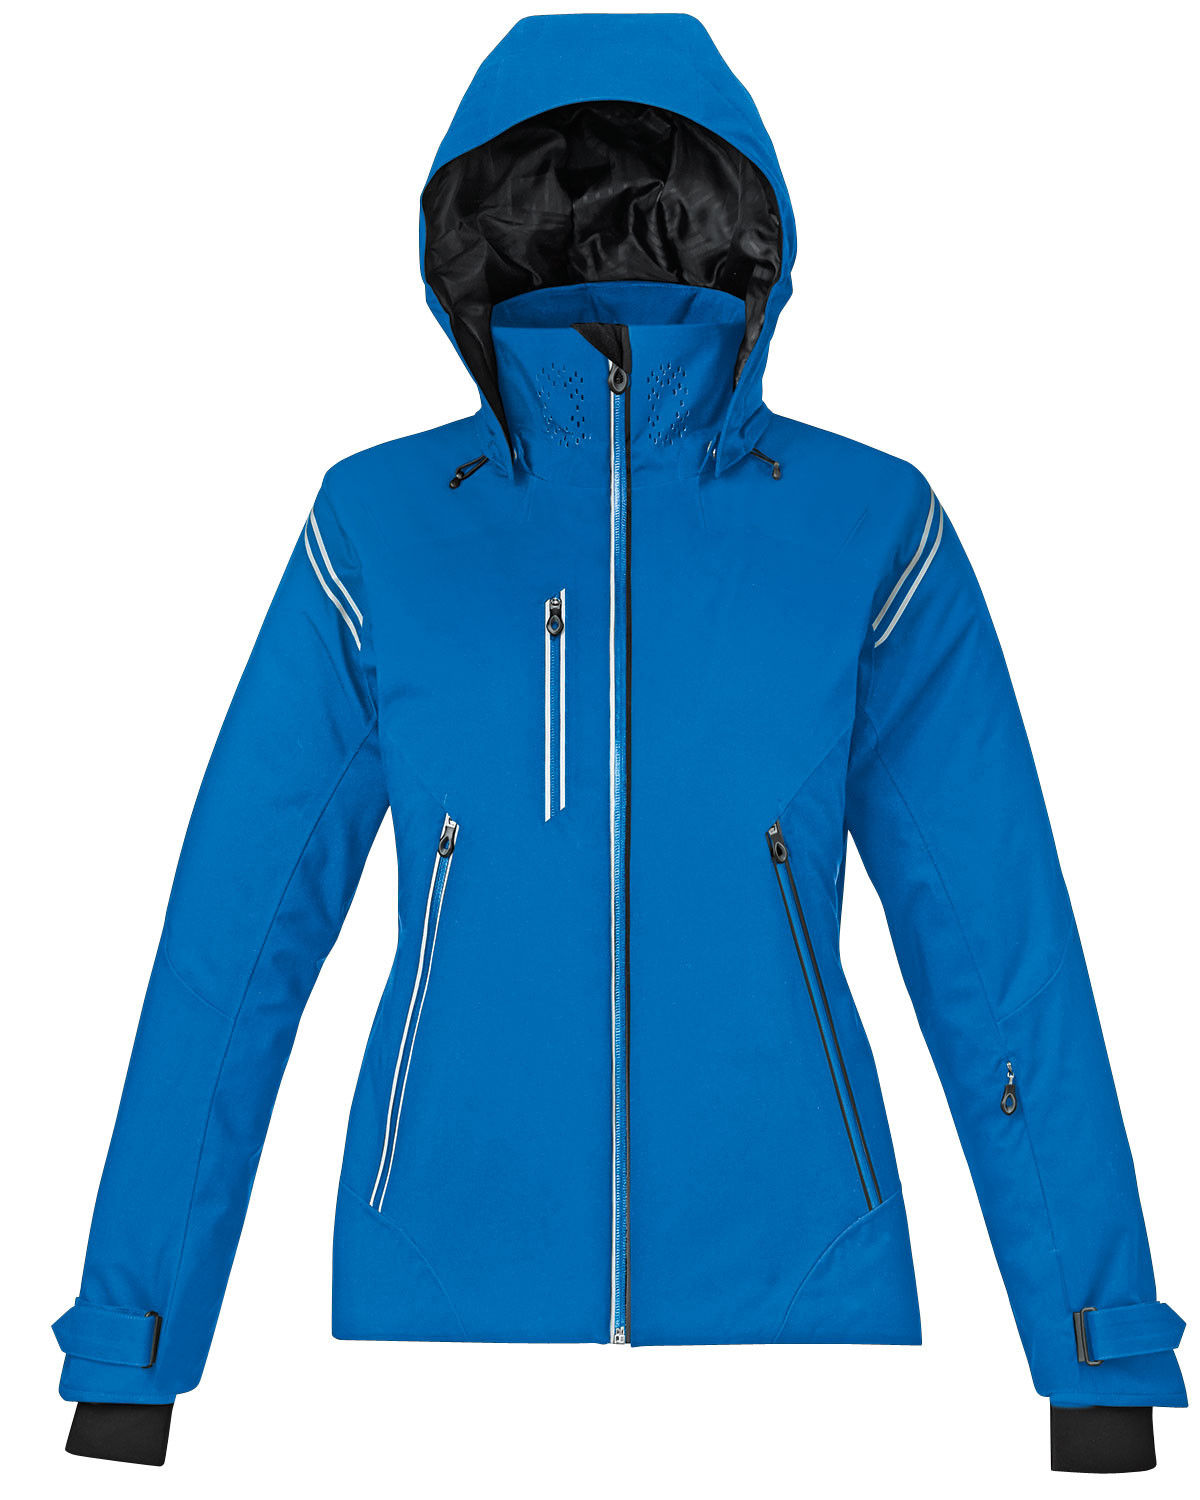 Ash City UTK 3 Warm.Logik 78680 - Ventilate Ladies' Seam-Sealed Insulated Jacket